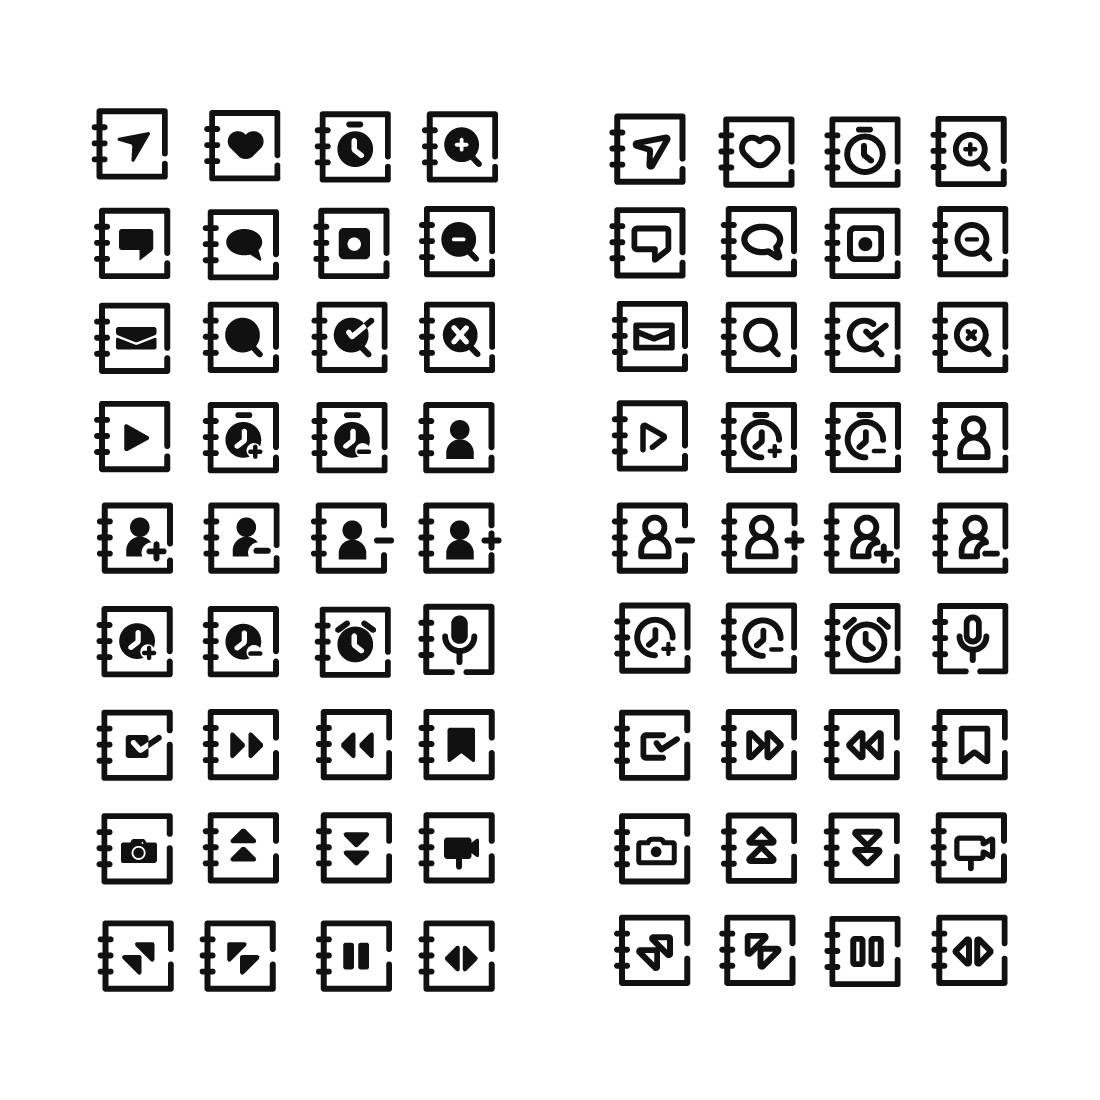 Black and white image of a set of symbols.